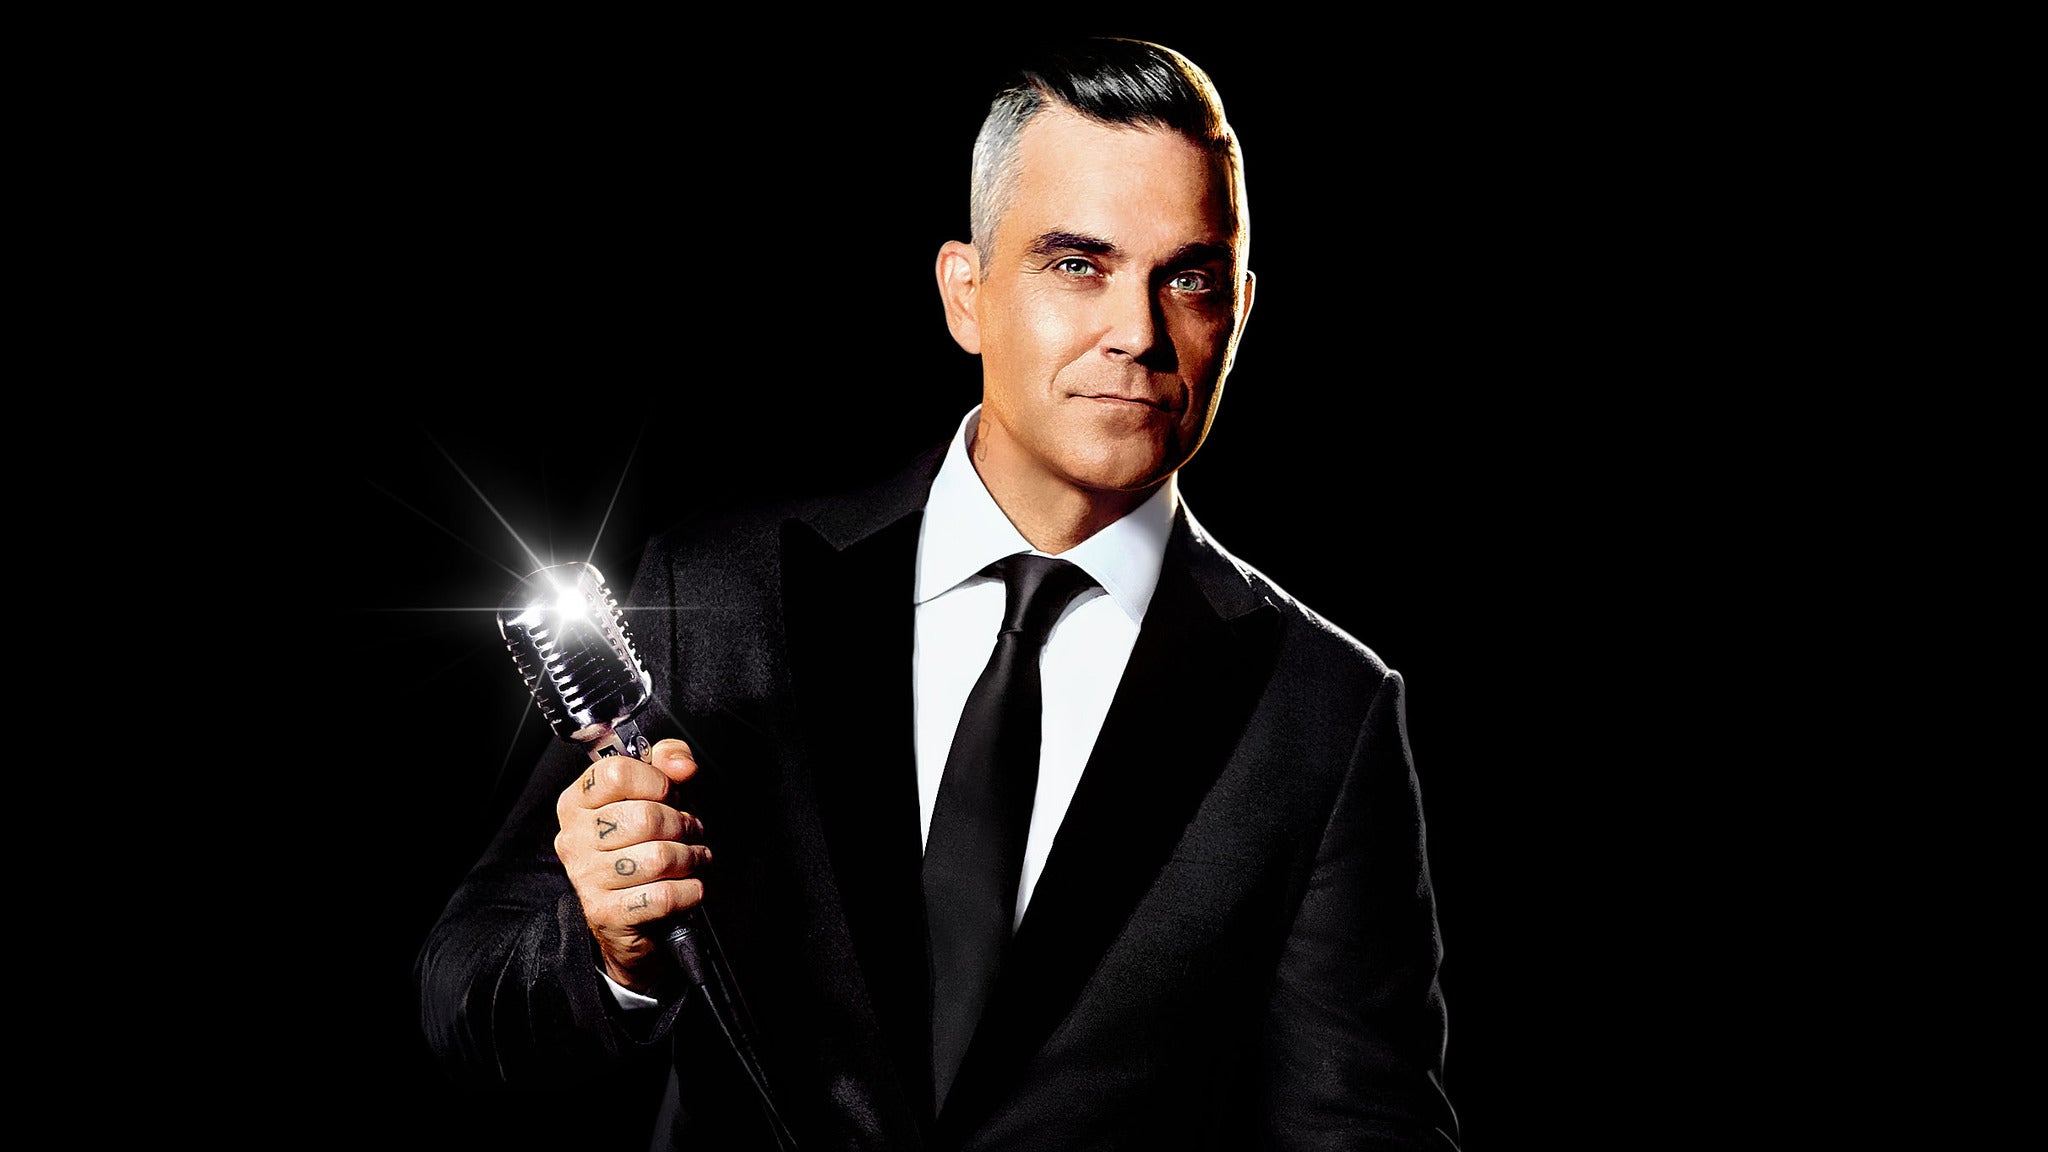 Robbie Williams Live in Las Vegas in Las Vegas promo photo for VIP Package presale offer code